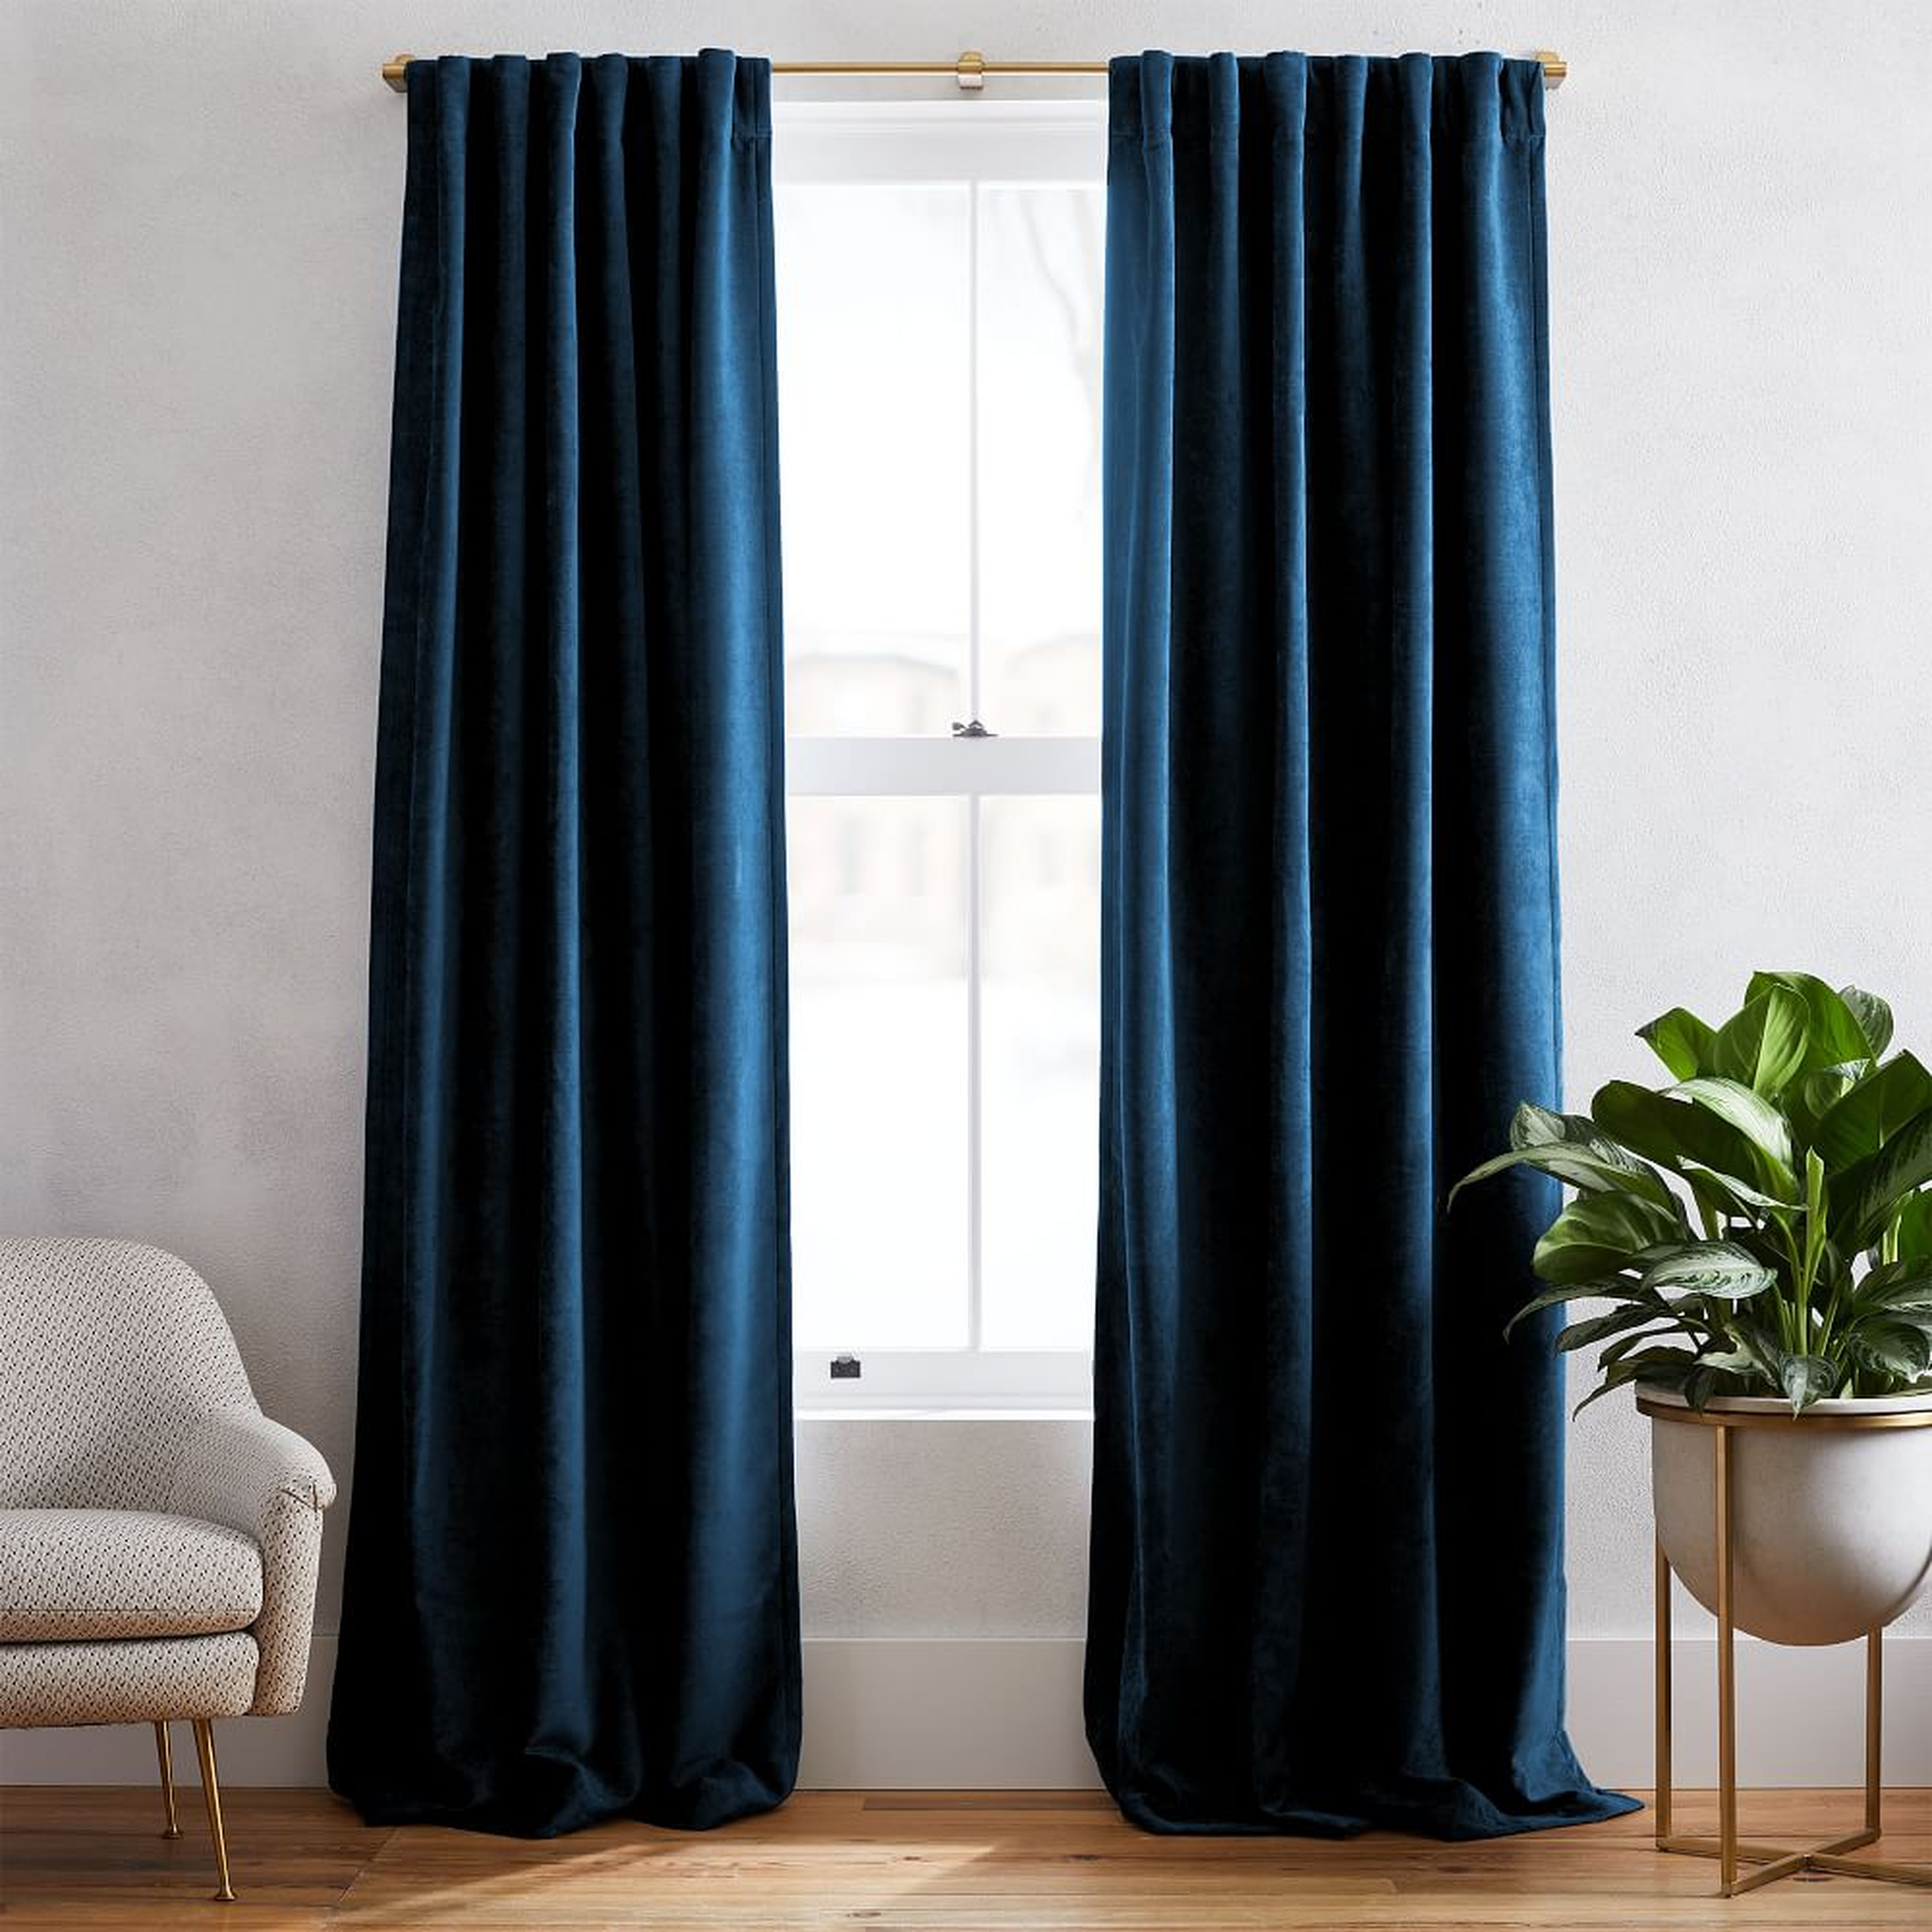 Worn Velvet Curtain with Blackout Lining, Regal Blue, 48"x84" - West Elm